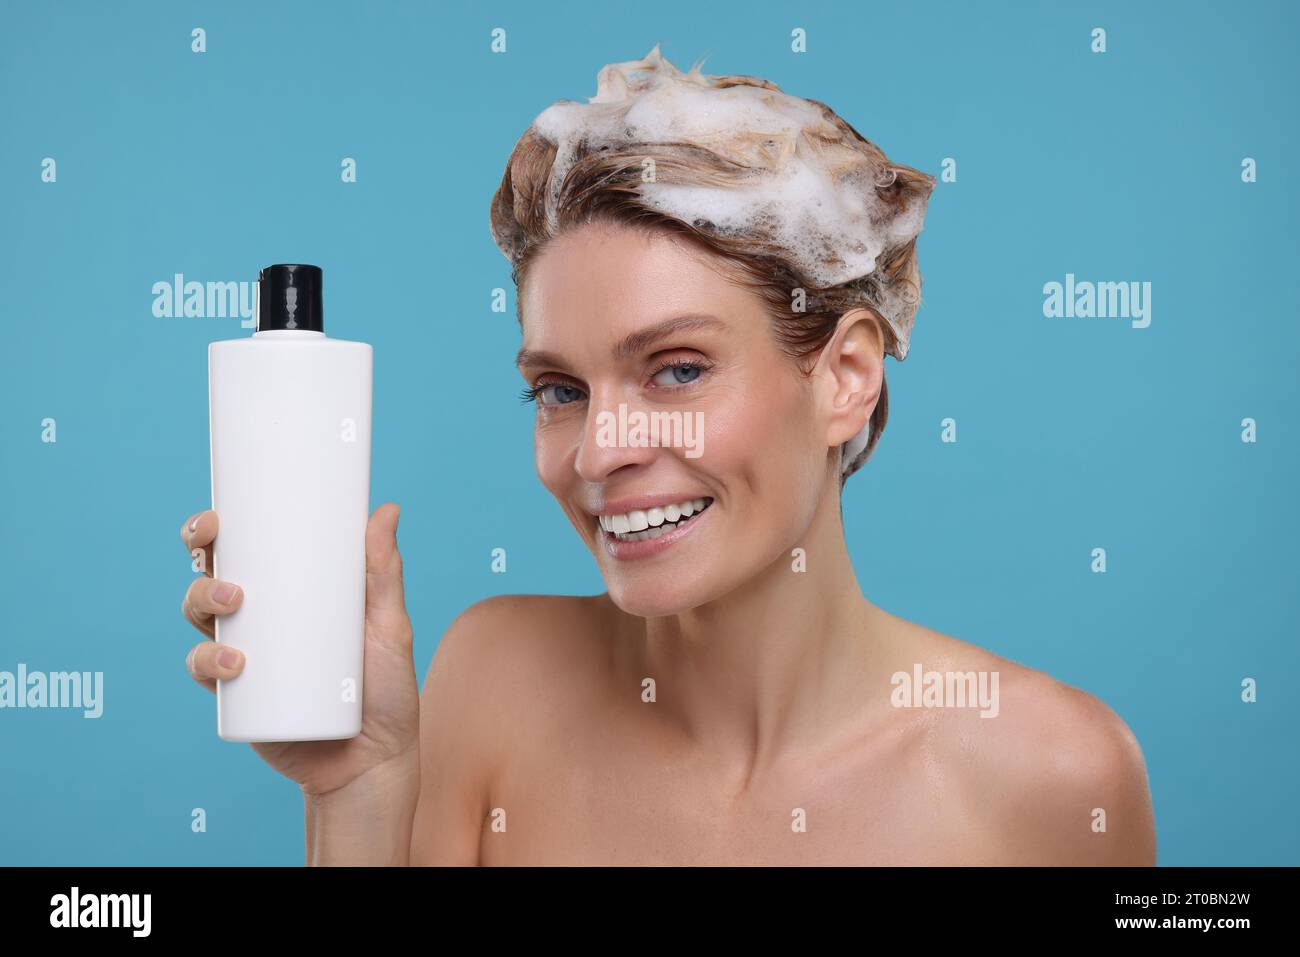 Woman Shower Washing Hair Shampoo Stock Photo by ©jayzynism 202171214